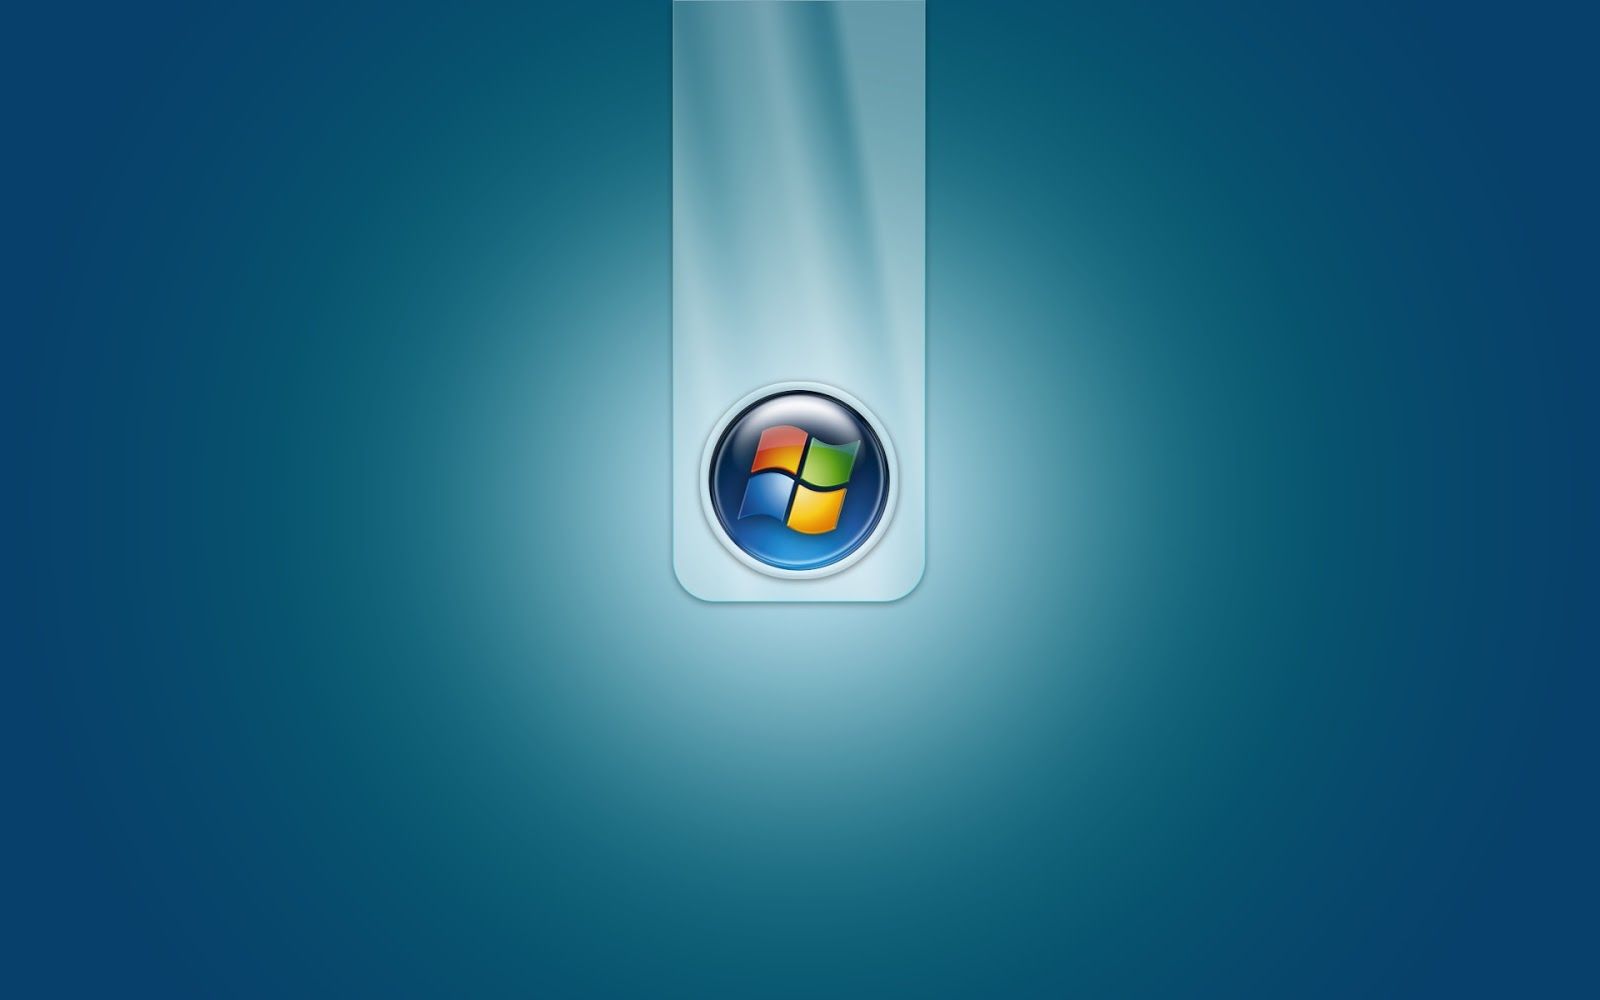 trololo blogg: Hd Wallpaper Windows Vista